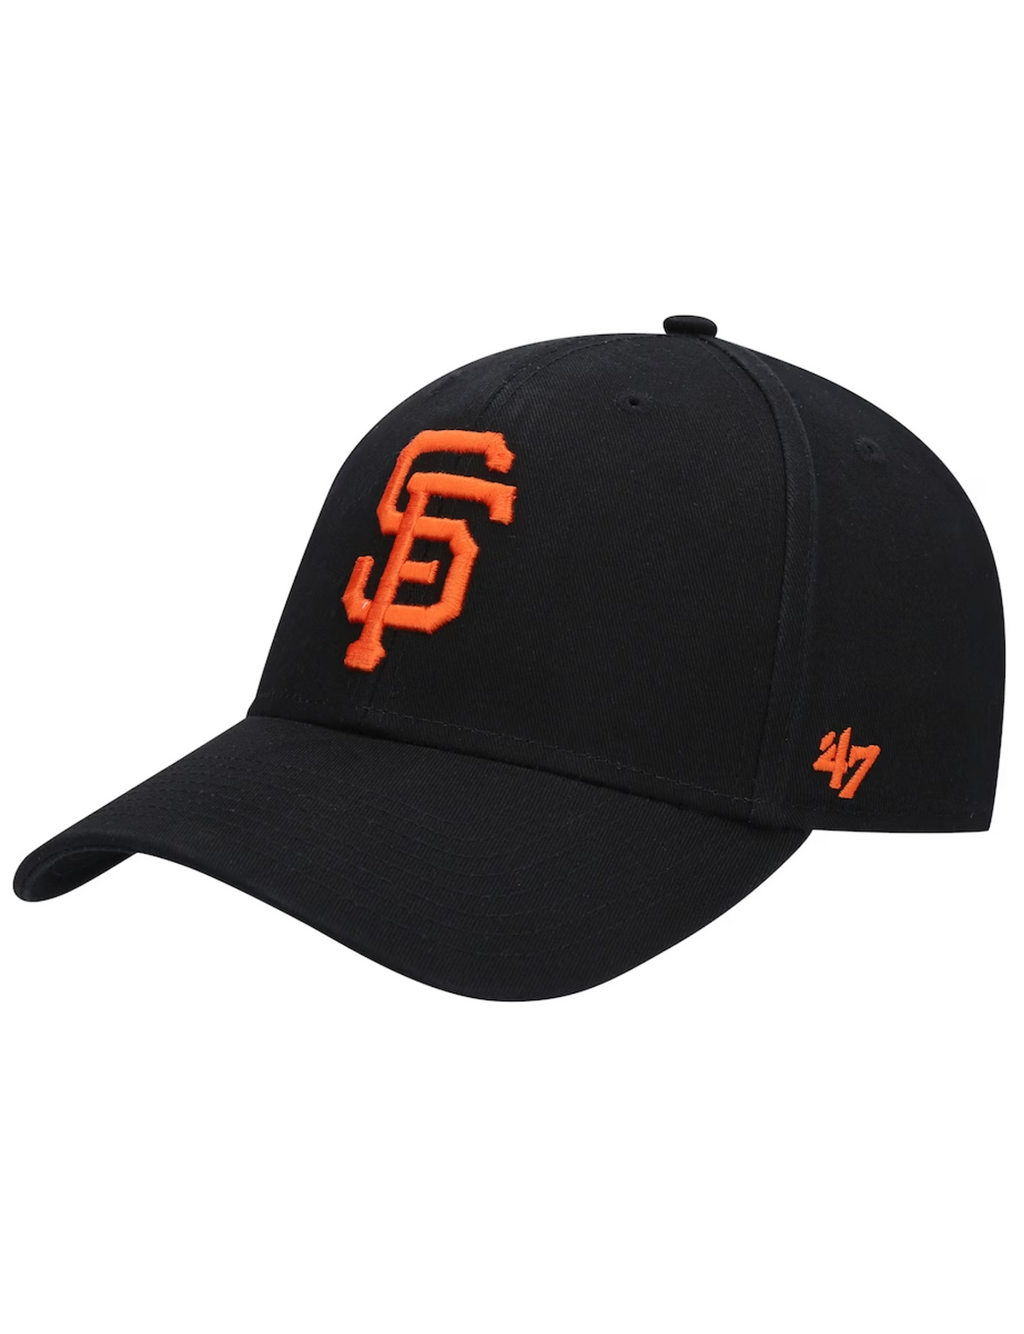 SF Giants Basic Ball Cap, Black/Orange